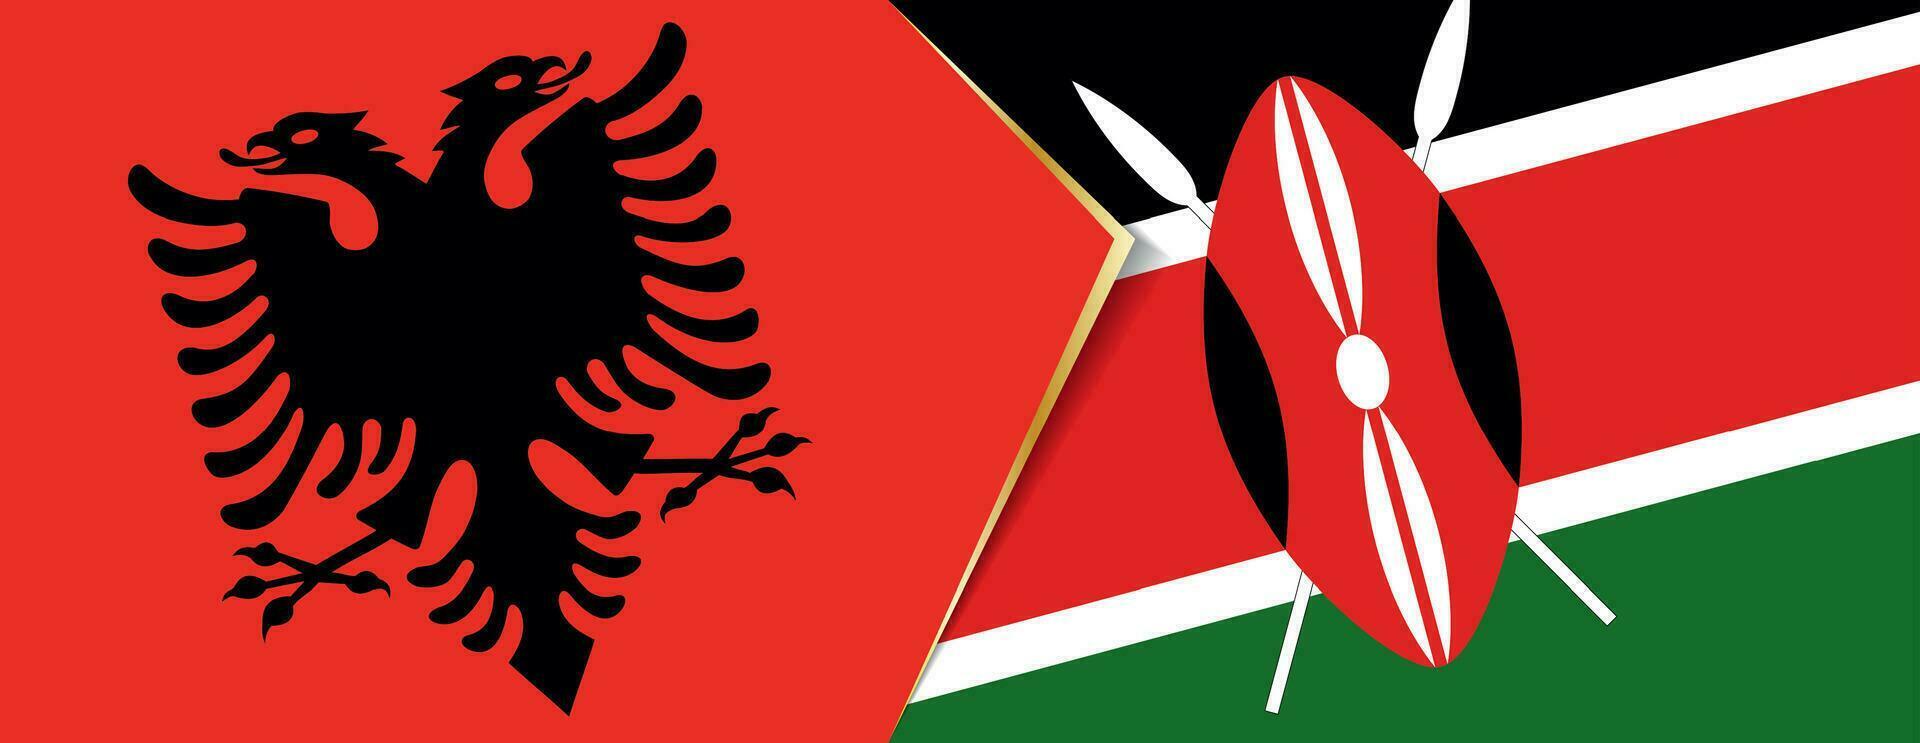 Albânia e Quênia bandeiras, dois vetor bandeiras.